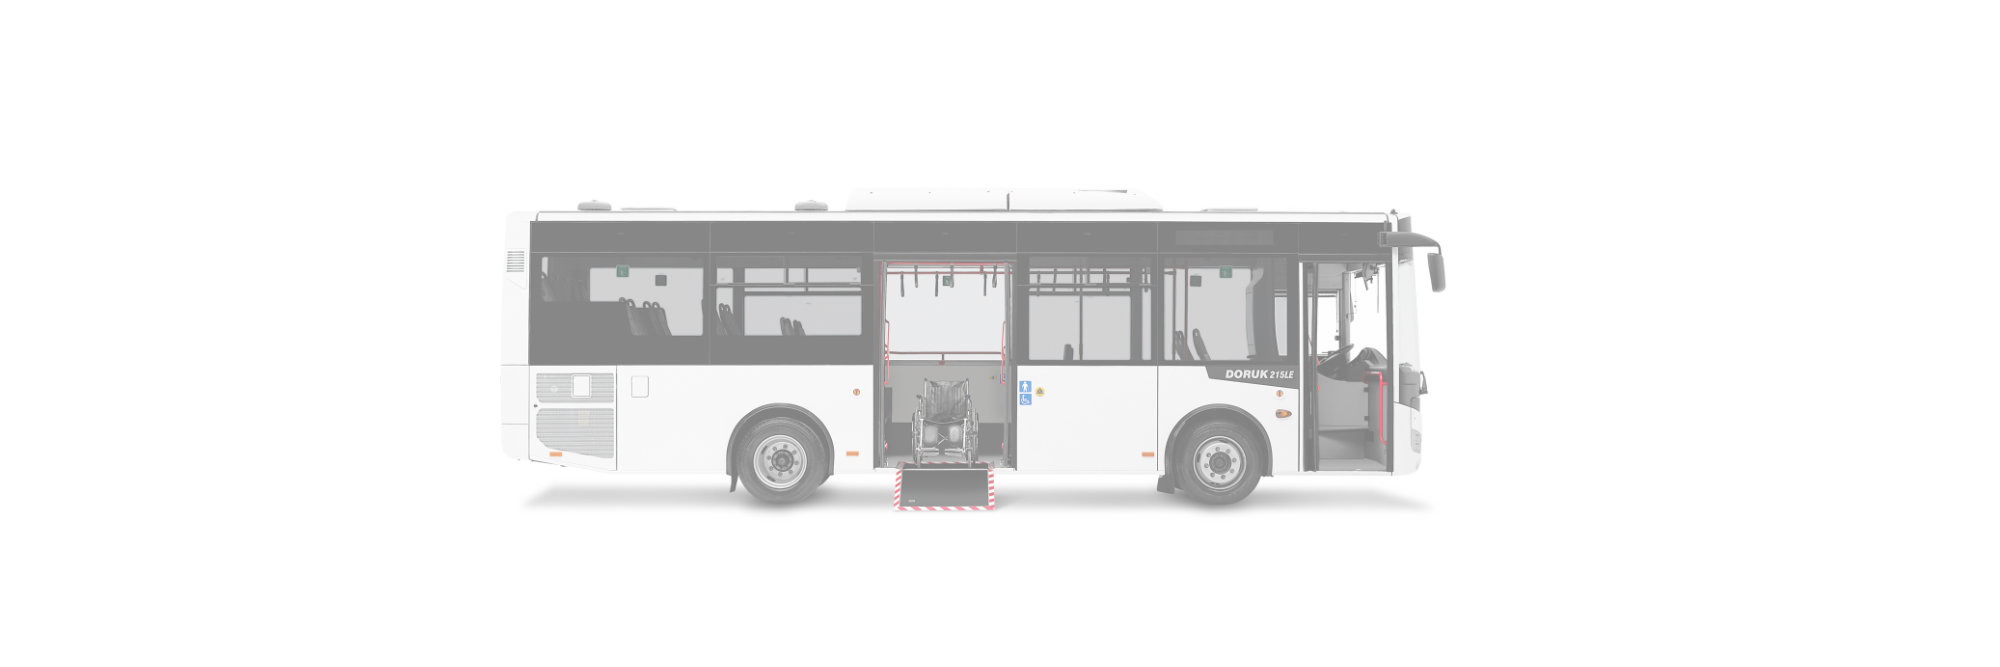 Decopan Passenger otobüs, midibüs, minibüs, tramvay CTP levha